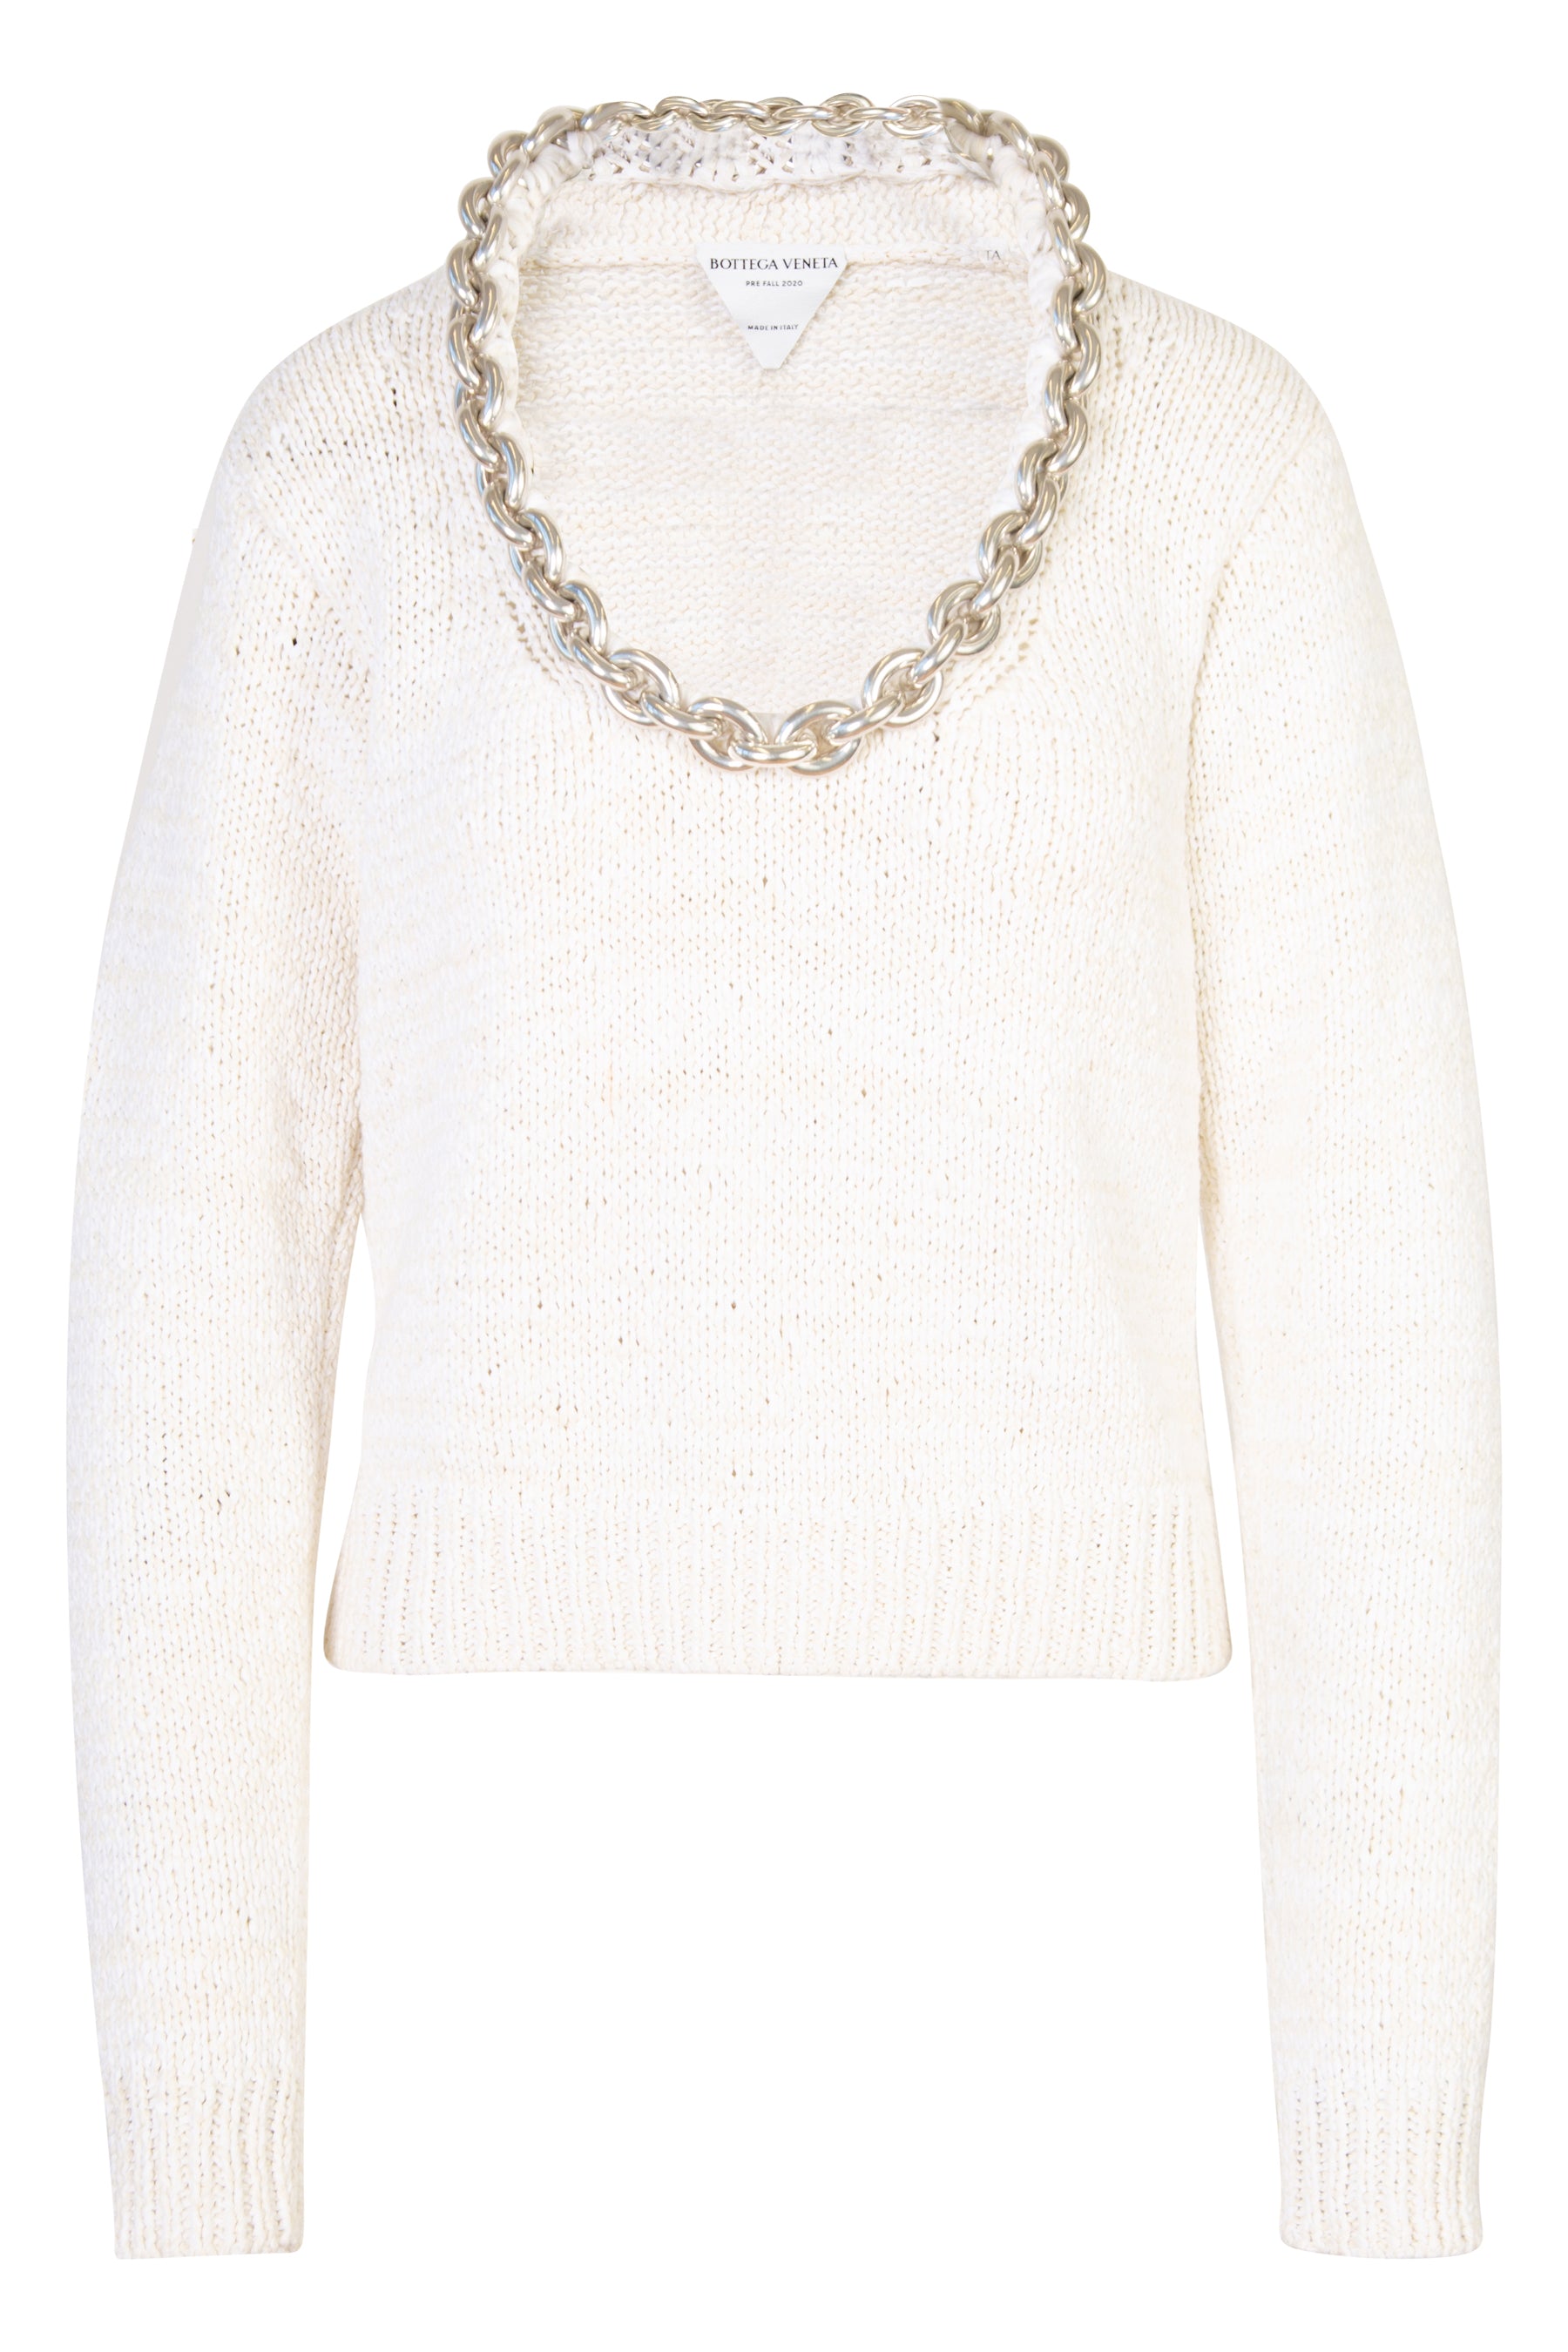 Bottega Veneta Chain-detailed Cotton-blend Scoop-neck Sweater | PF '20 |  (est. retail $1